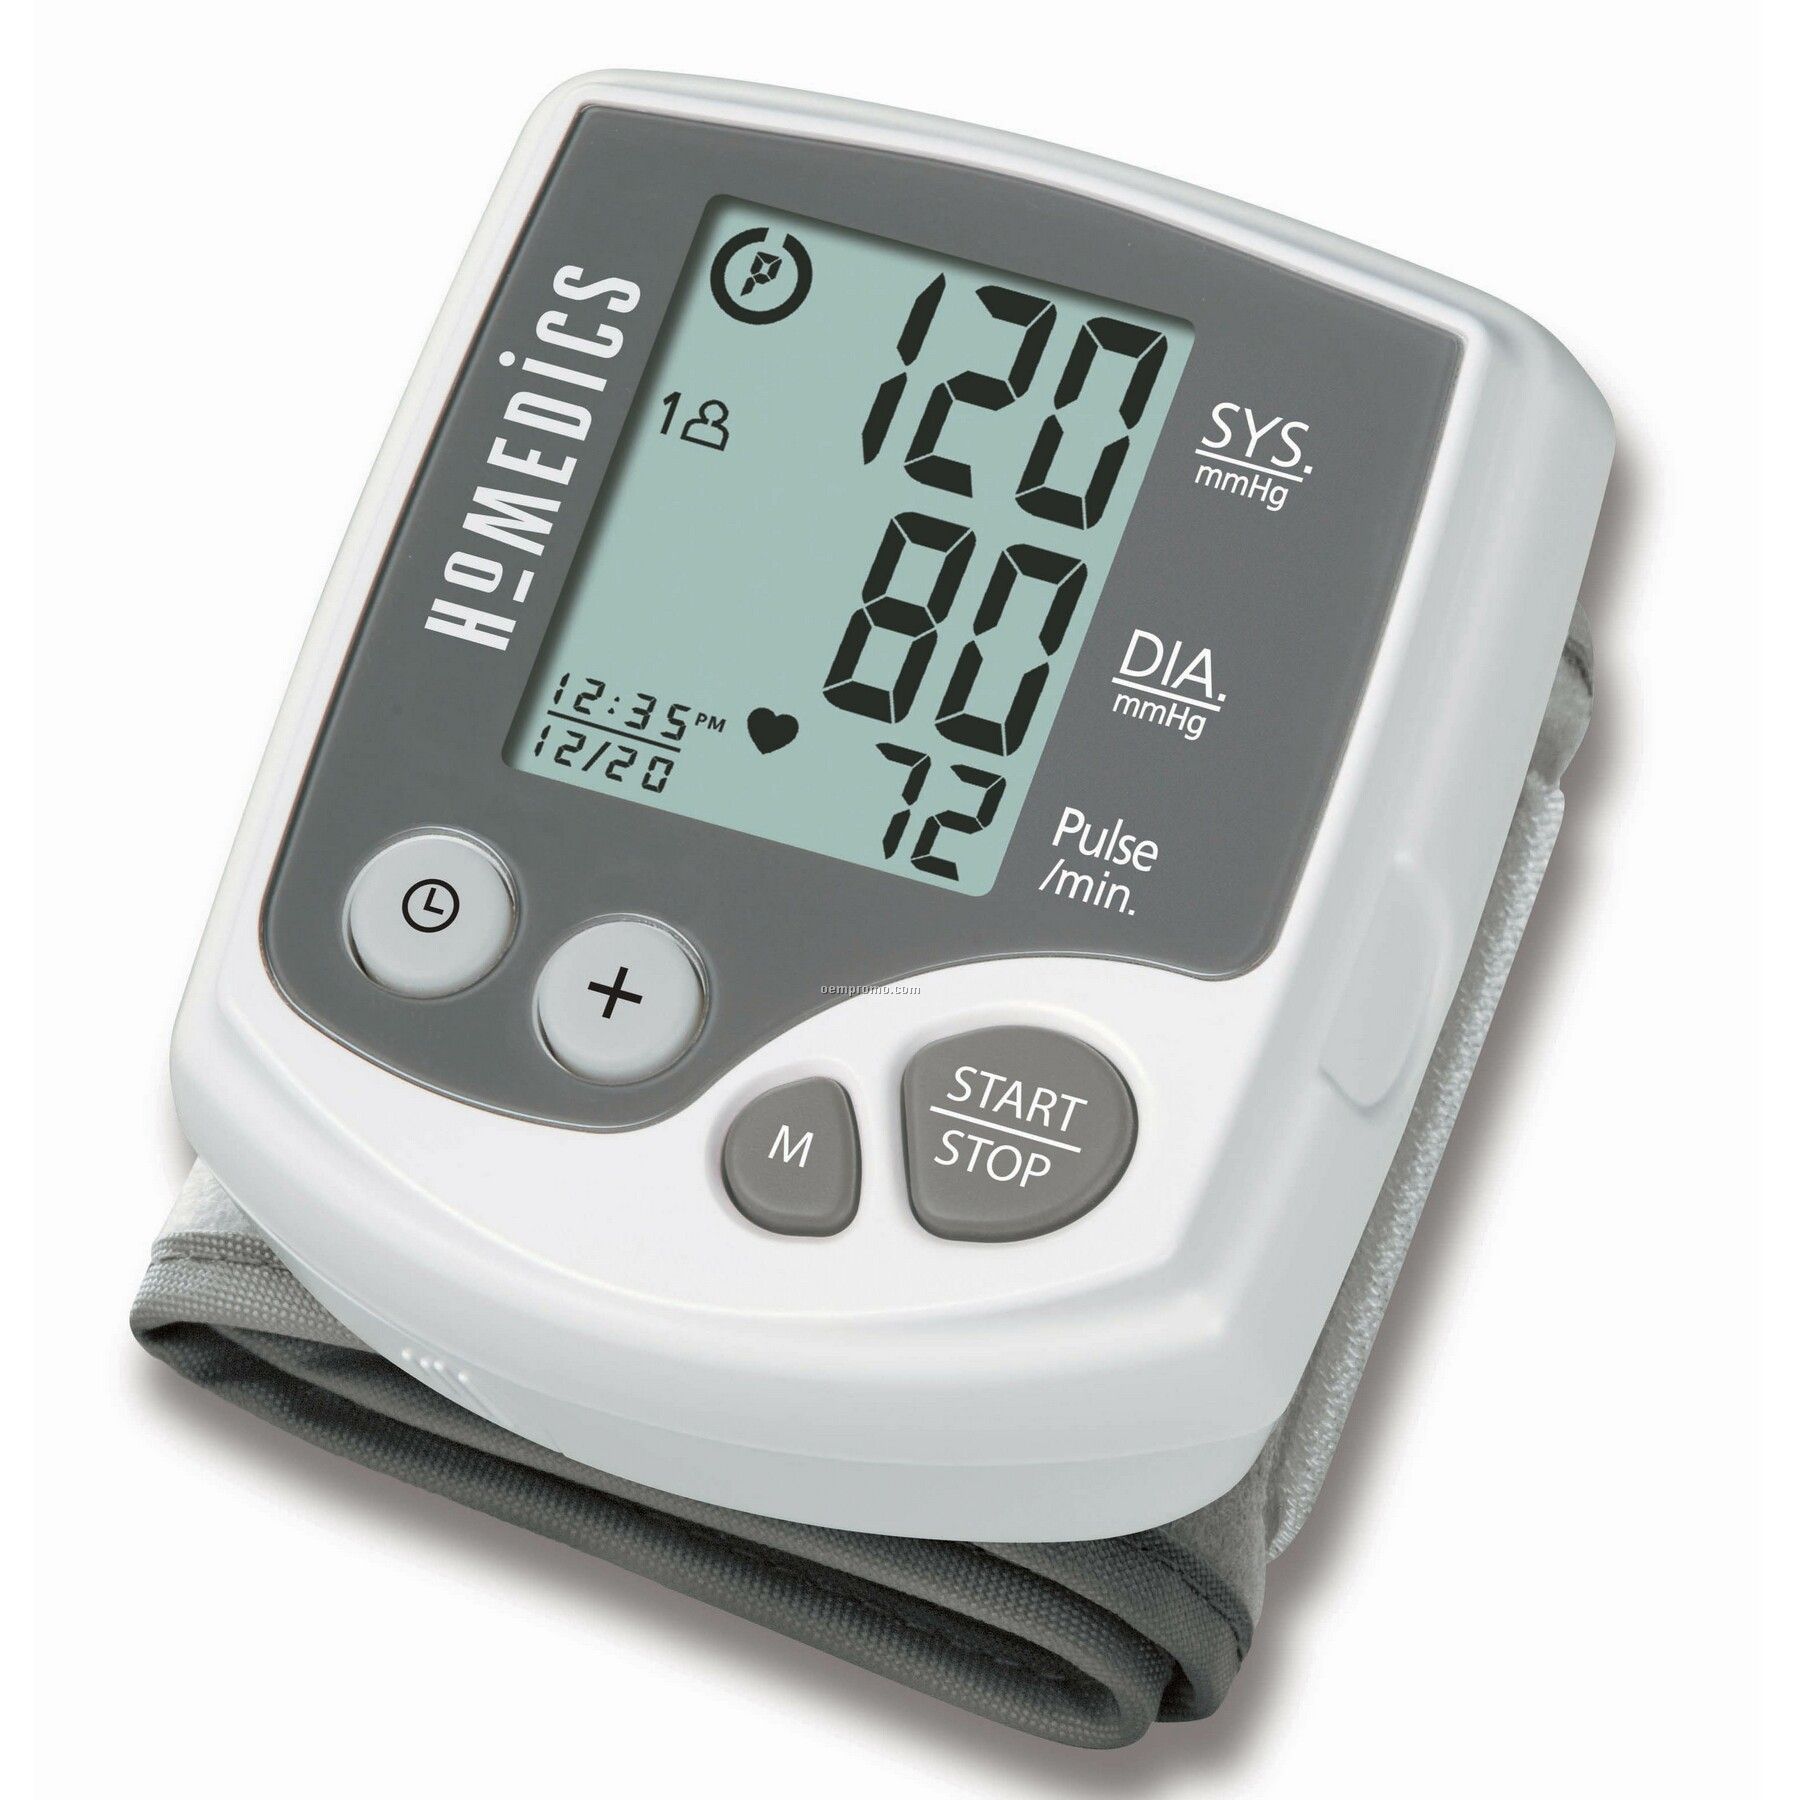 Homedics Automatic Wrist Blood Pressure Monitor